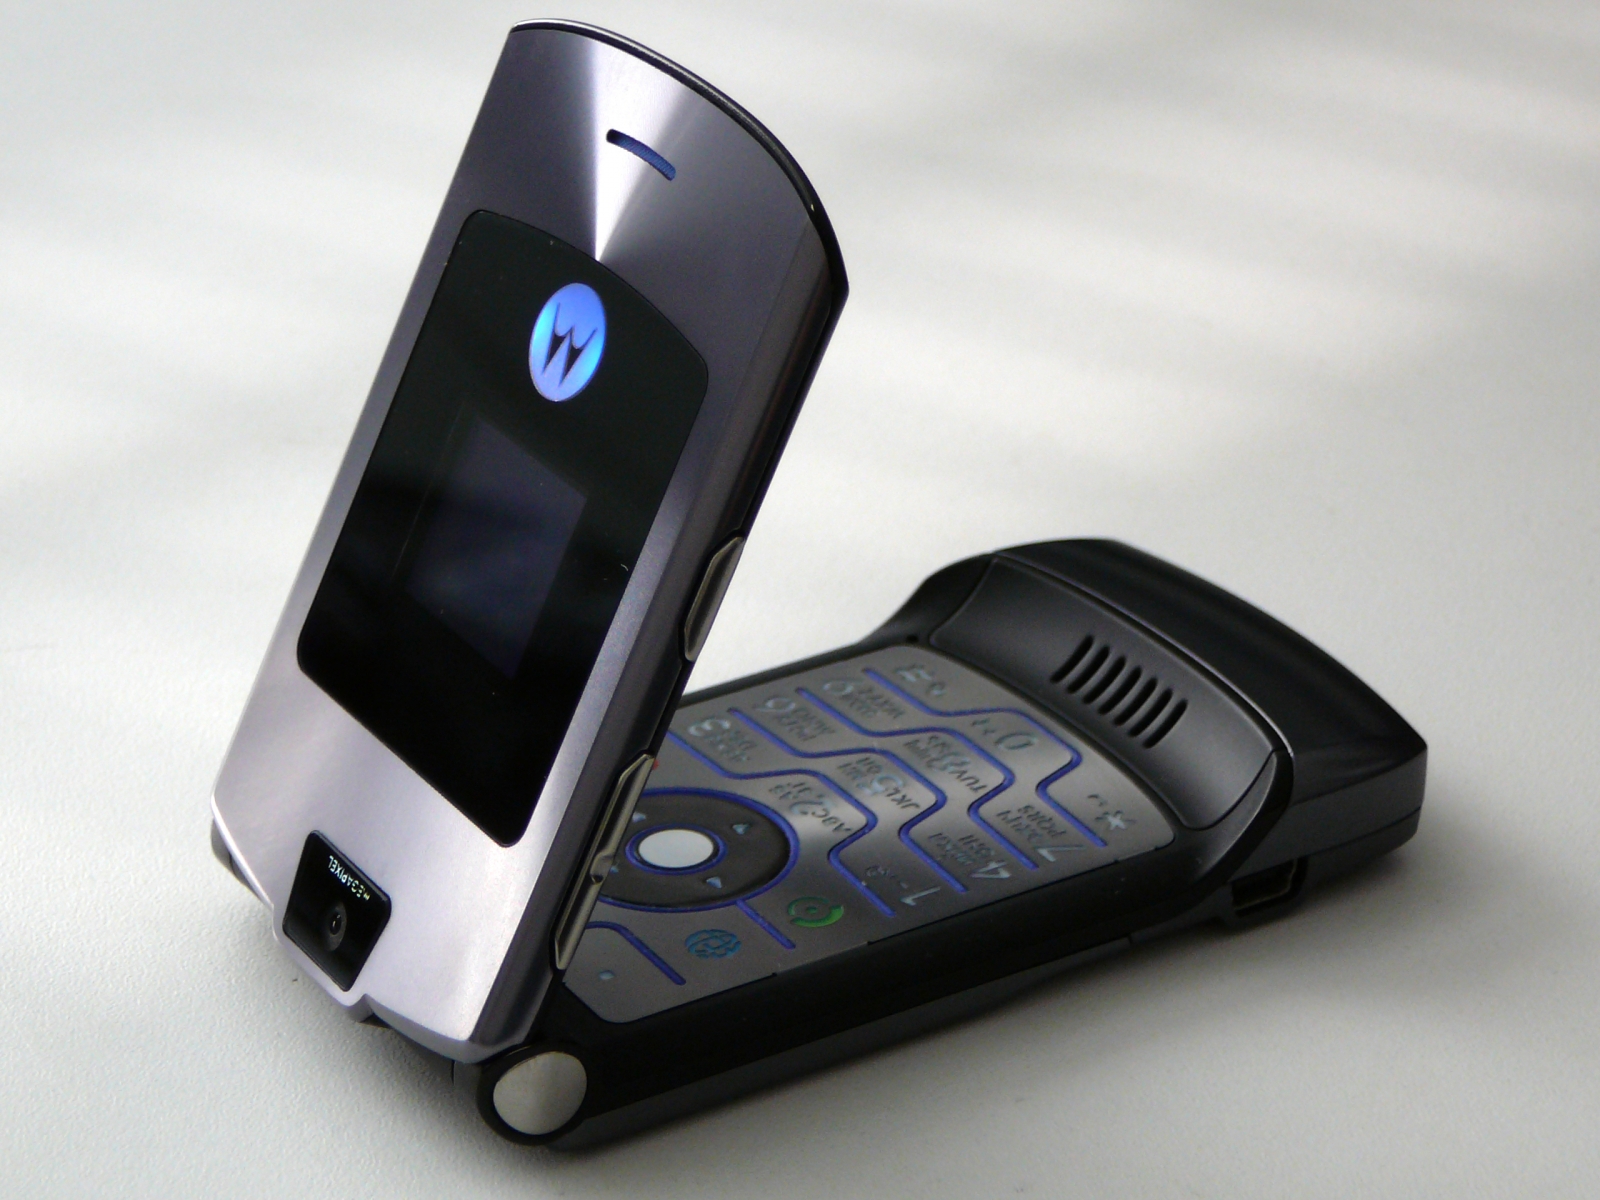 Motorola RAZR V3i mobile phone